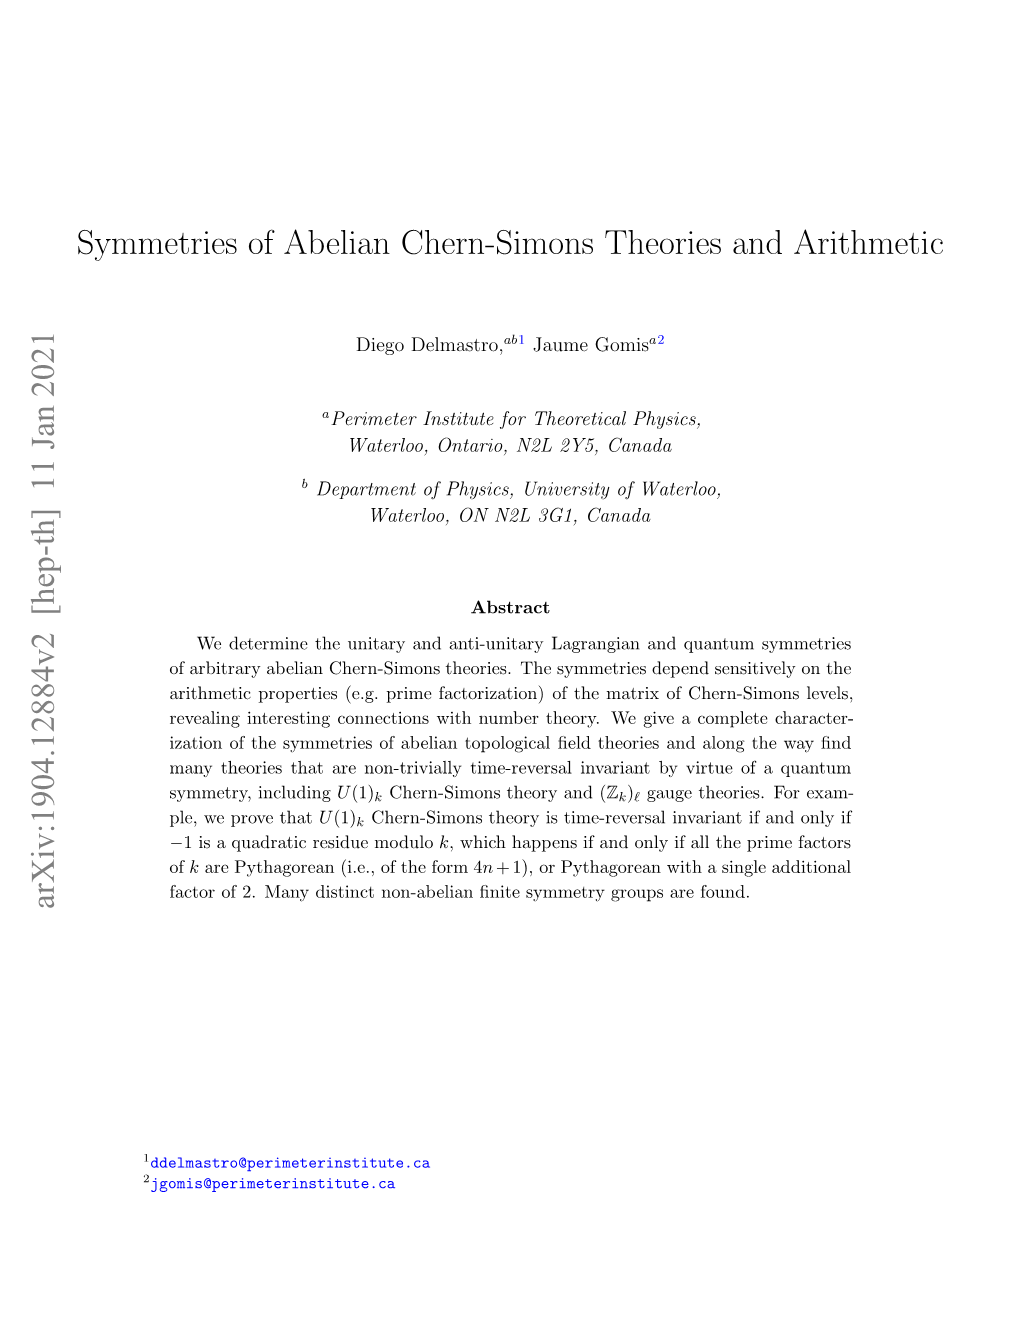 Symmetries of Abelian Chern-Simons Theories and Arithmetic